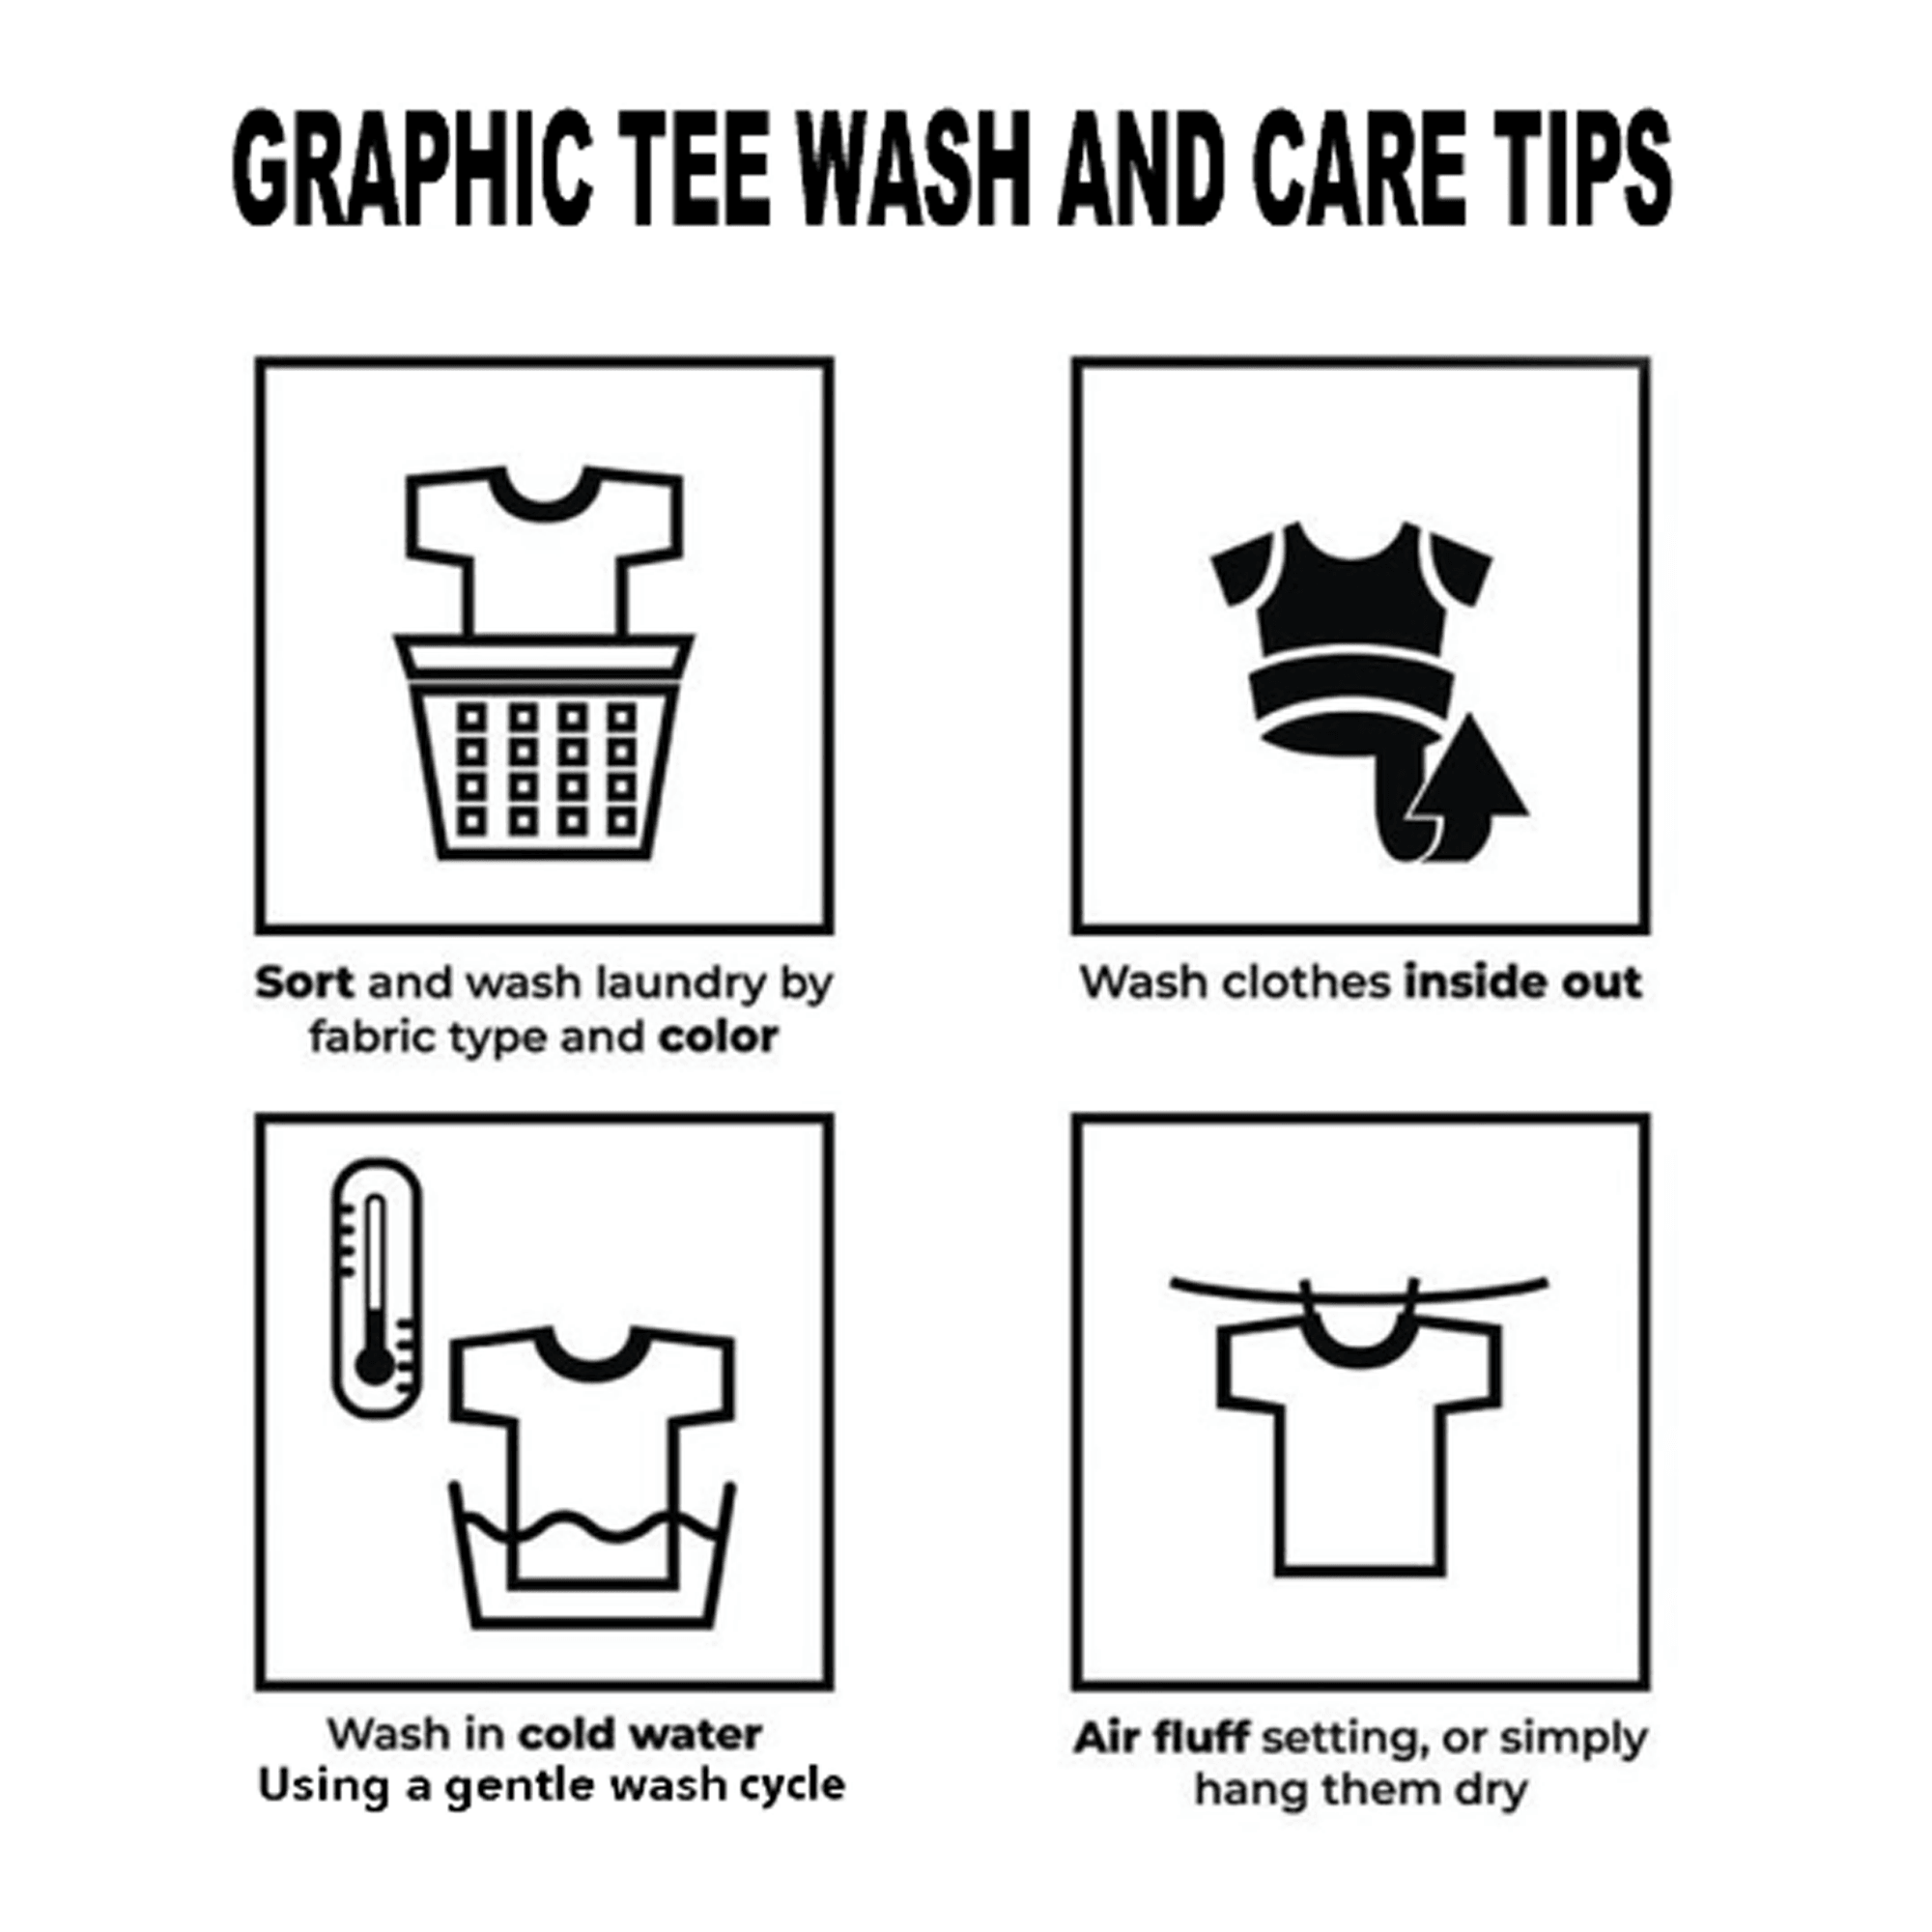 Savage Shirt Adidas Yeezy Boost 350 V2 Slate care tips photo